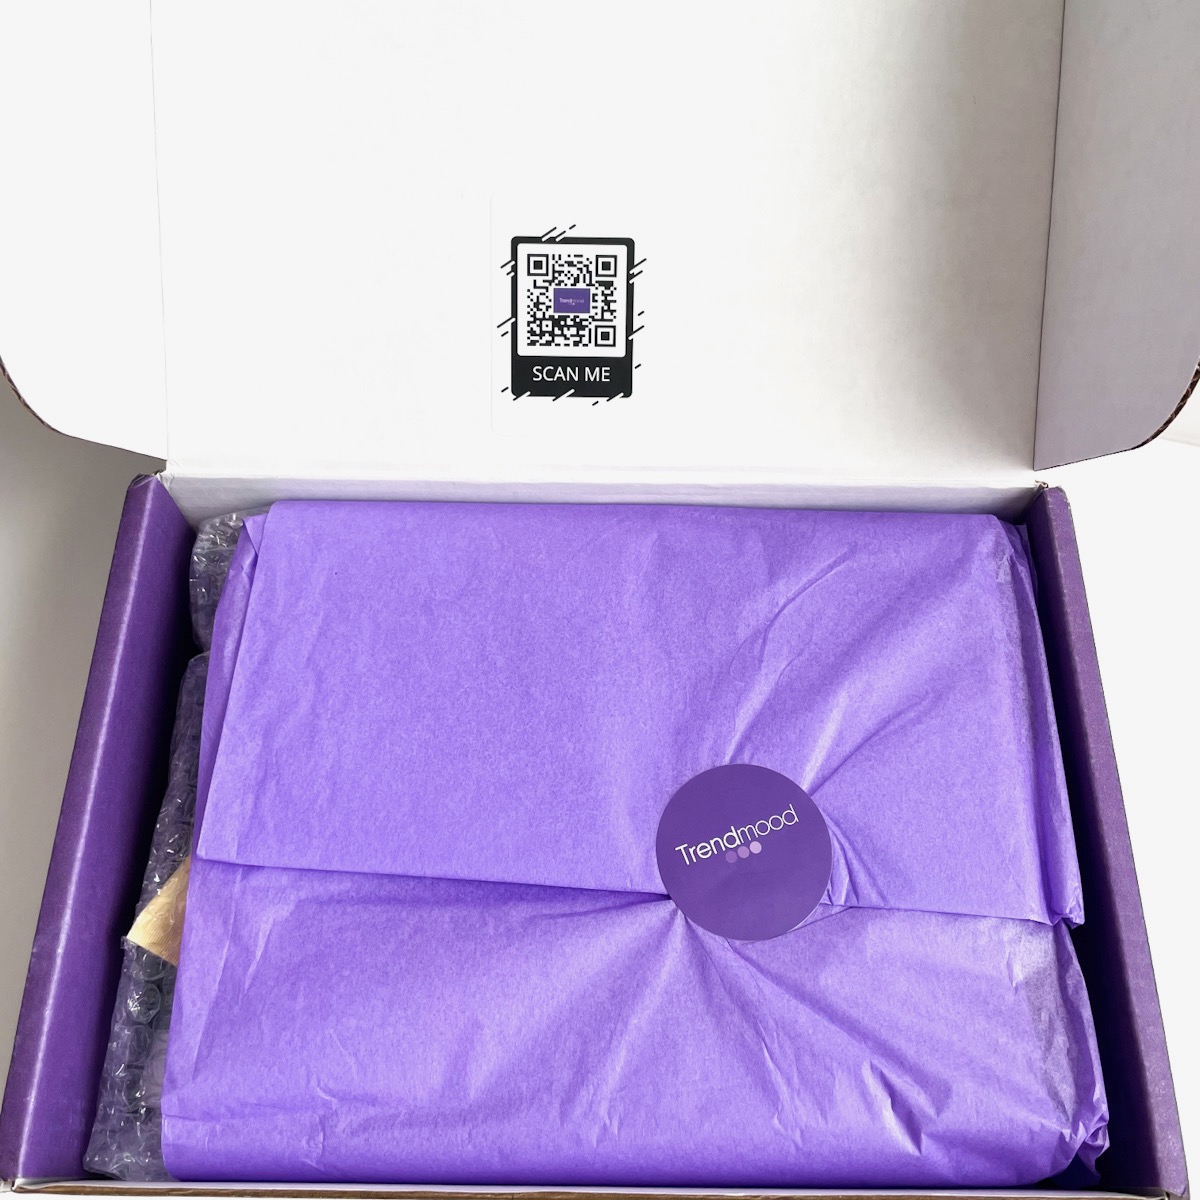 opened Trendmood Box showing purple tissue paper